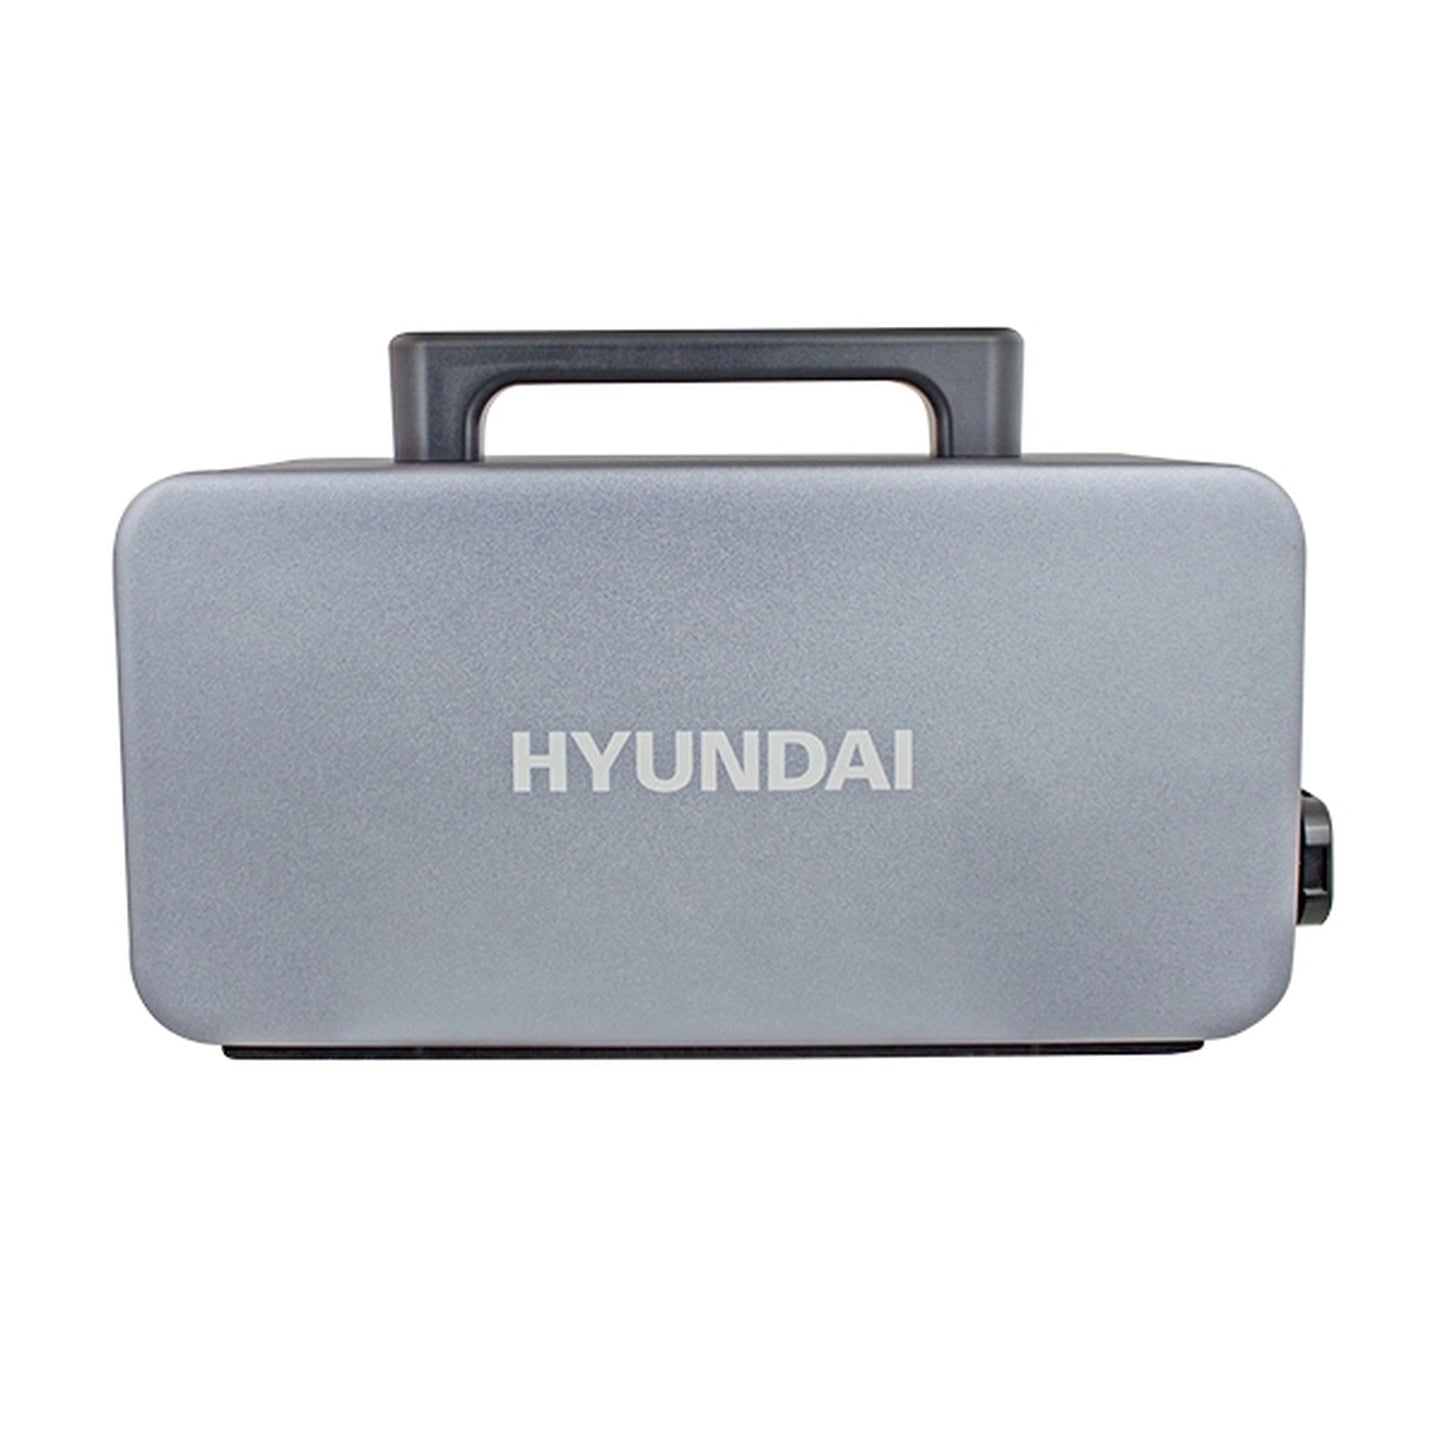 Hyundai HPS-1100 2000W Portable Power Station